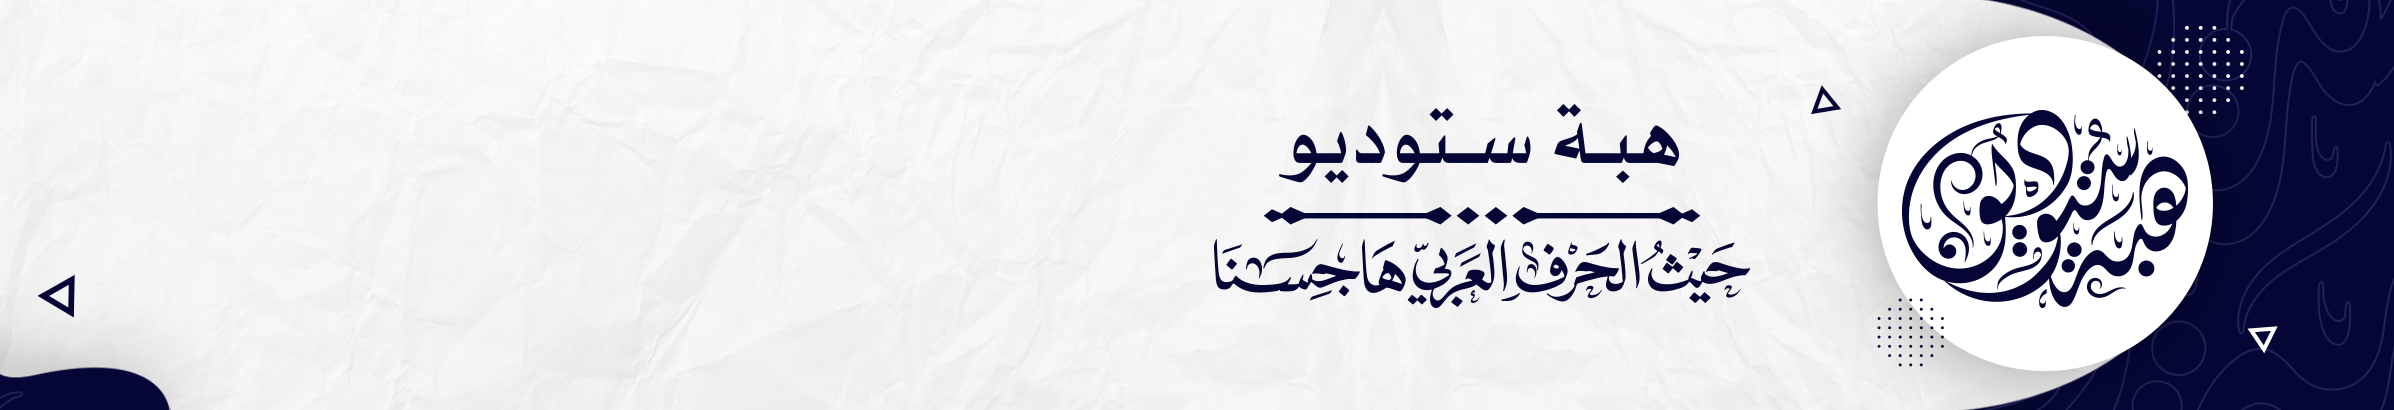 Hasan Abuafash's profile banner